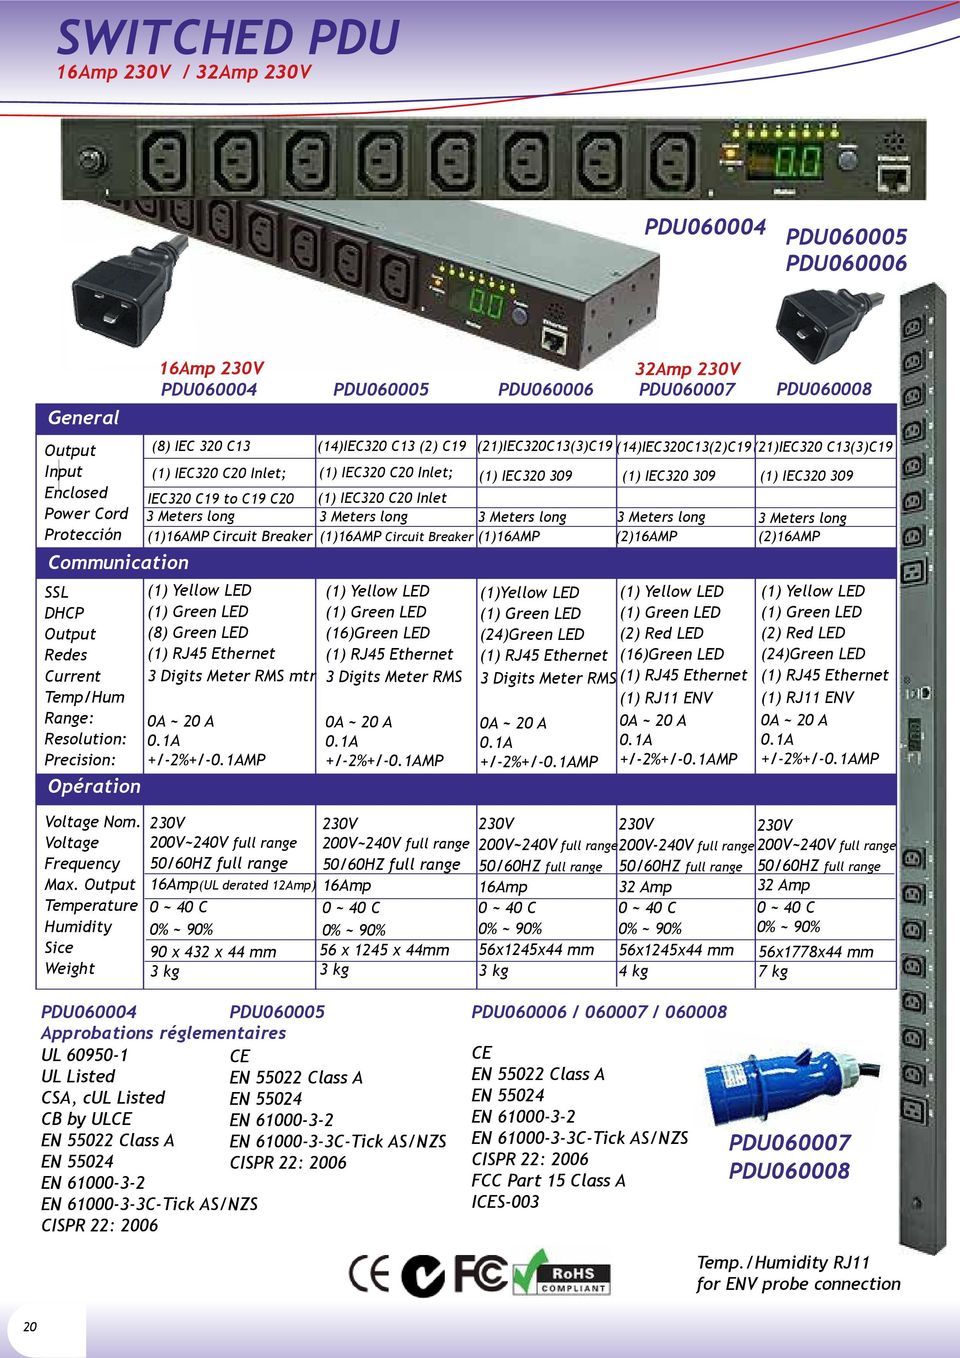 Protección (1)16AMP Circuit Breaker (1)16AMP Circuit Breaker (1)16AMP (2)16AMP (2)16AMP Communication SSL DHCP Redes Current Temp/Hum Range: Resolution: Precision: Operación Opération Voltage Nom.